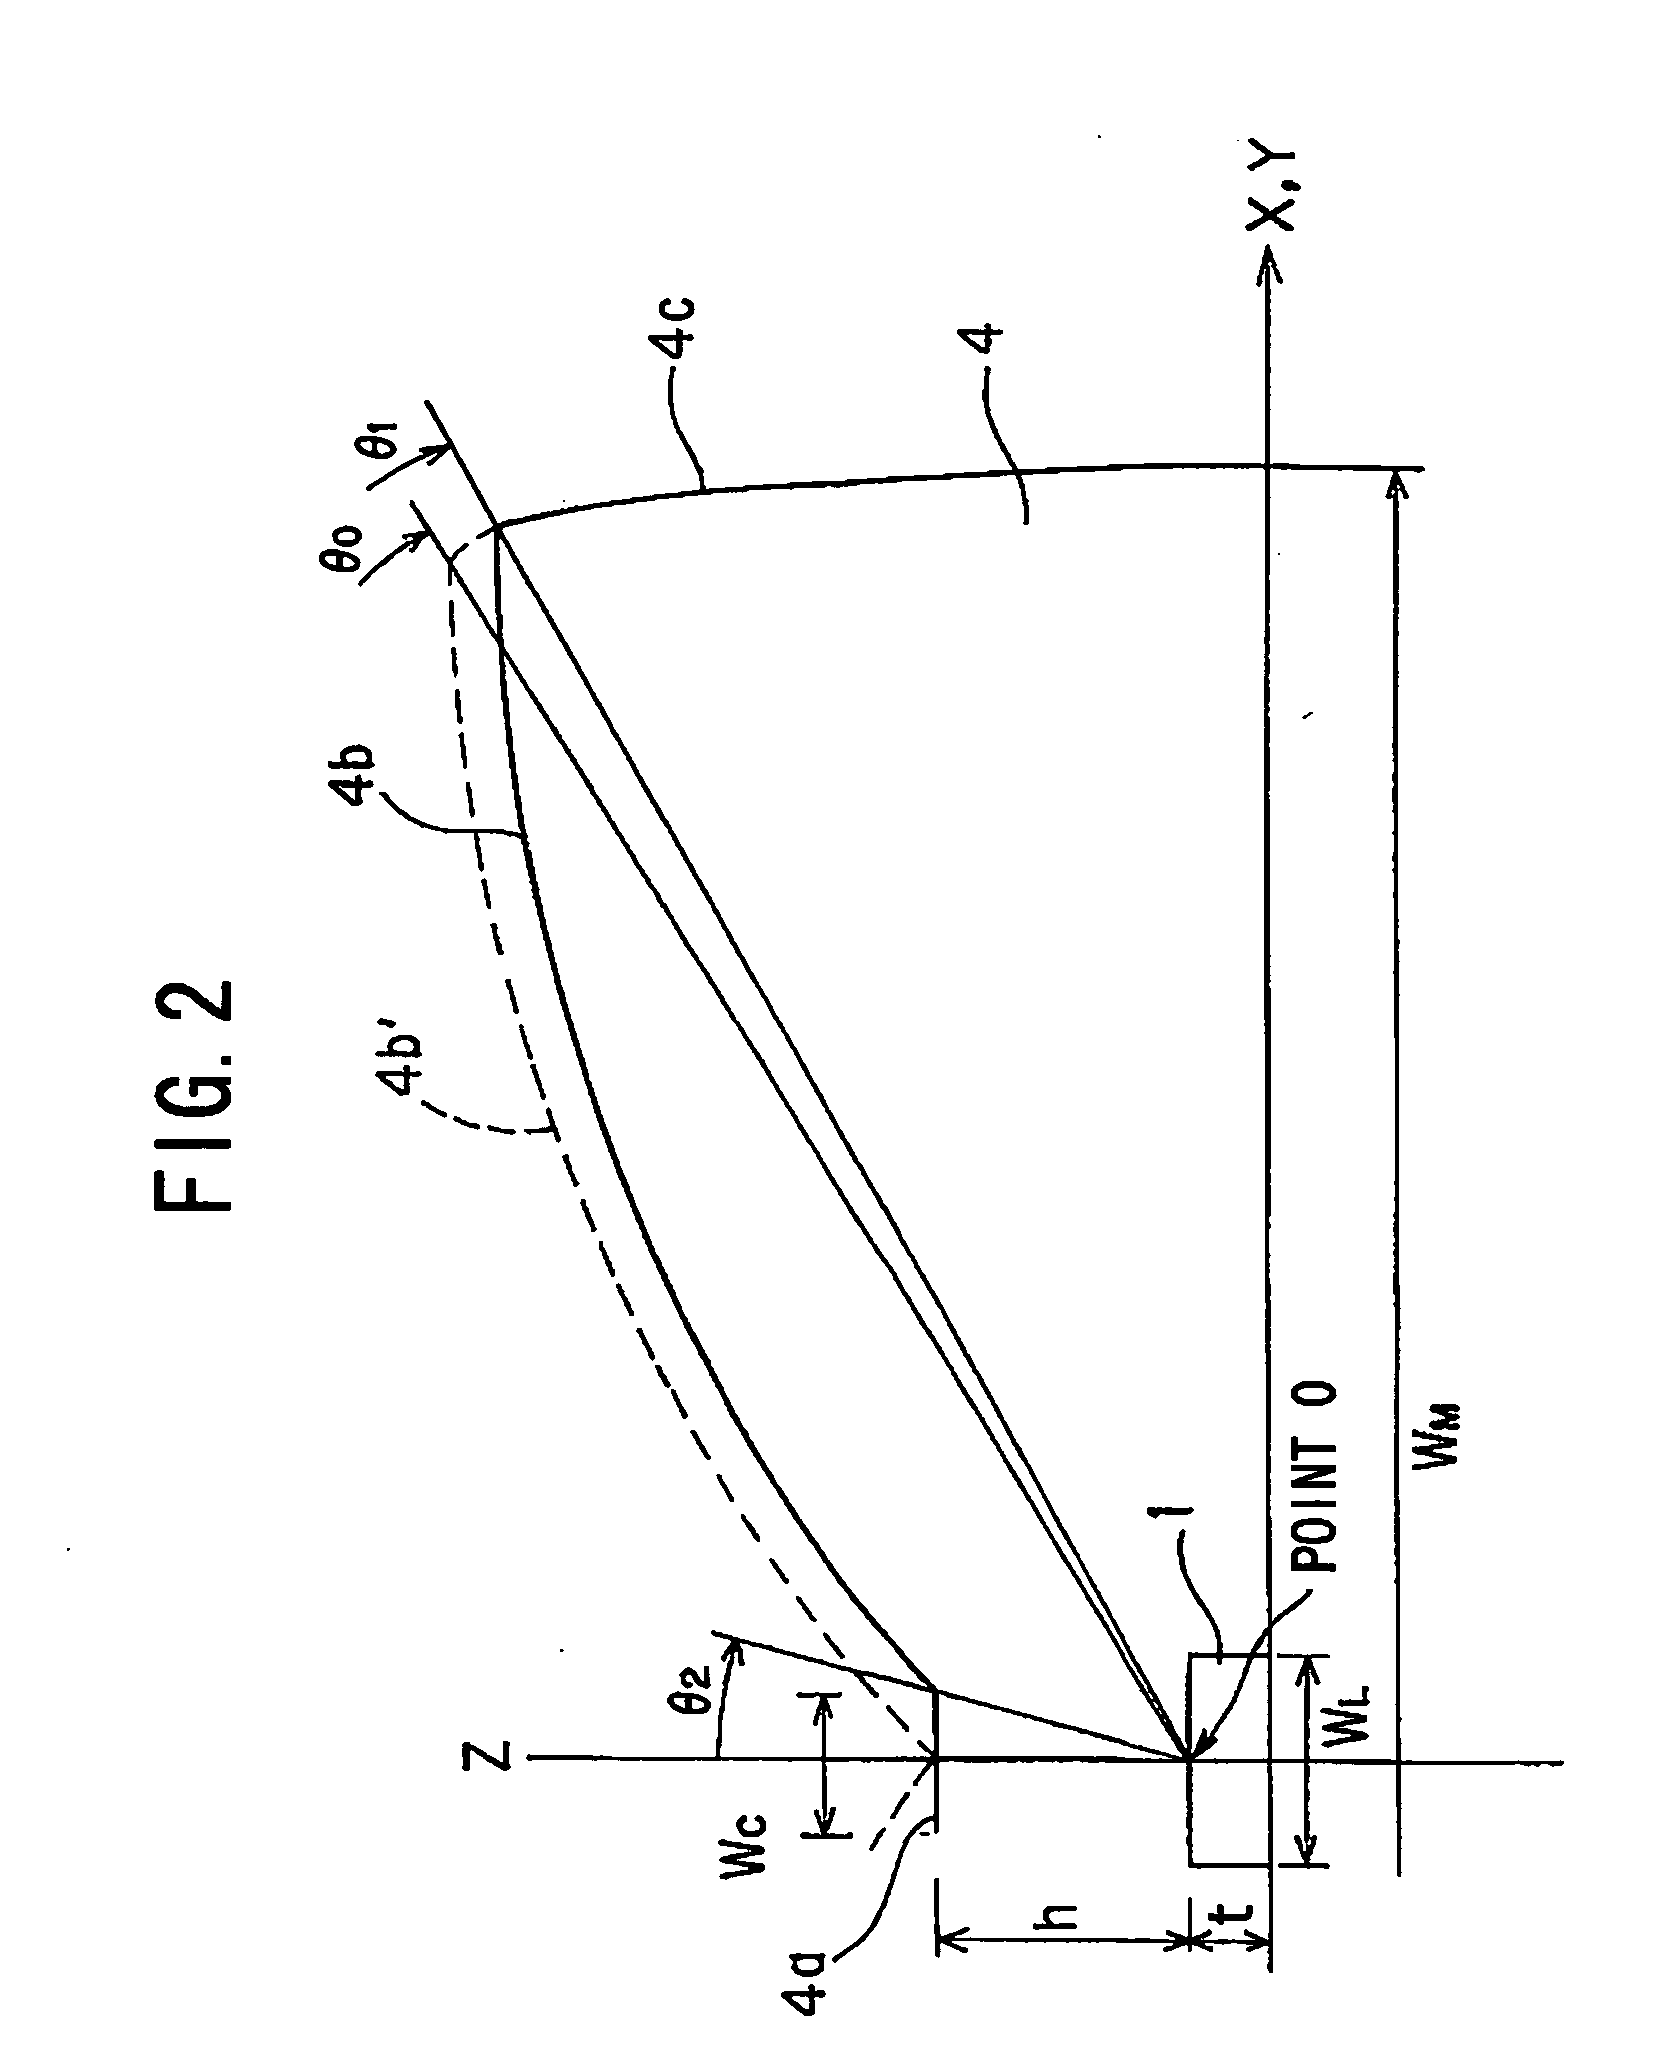 Light-emitting diode, led light, and light apparatus